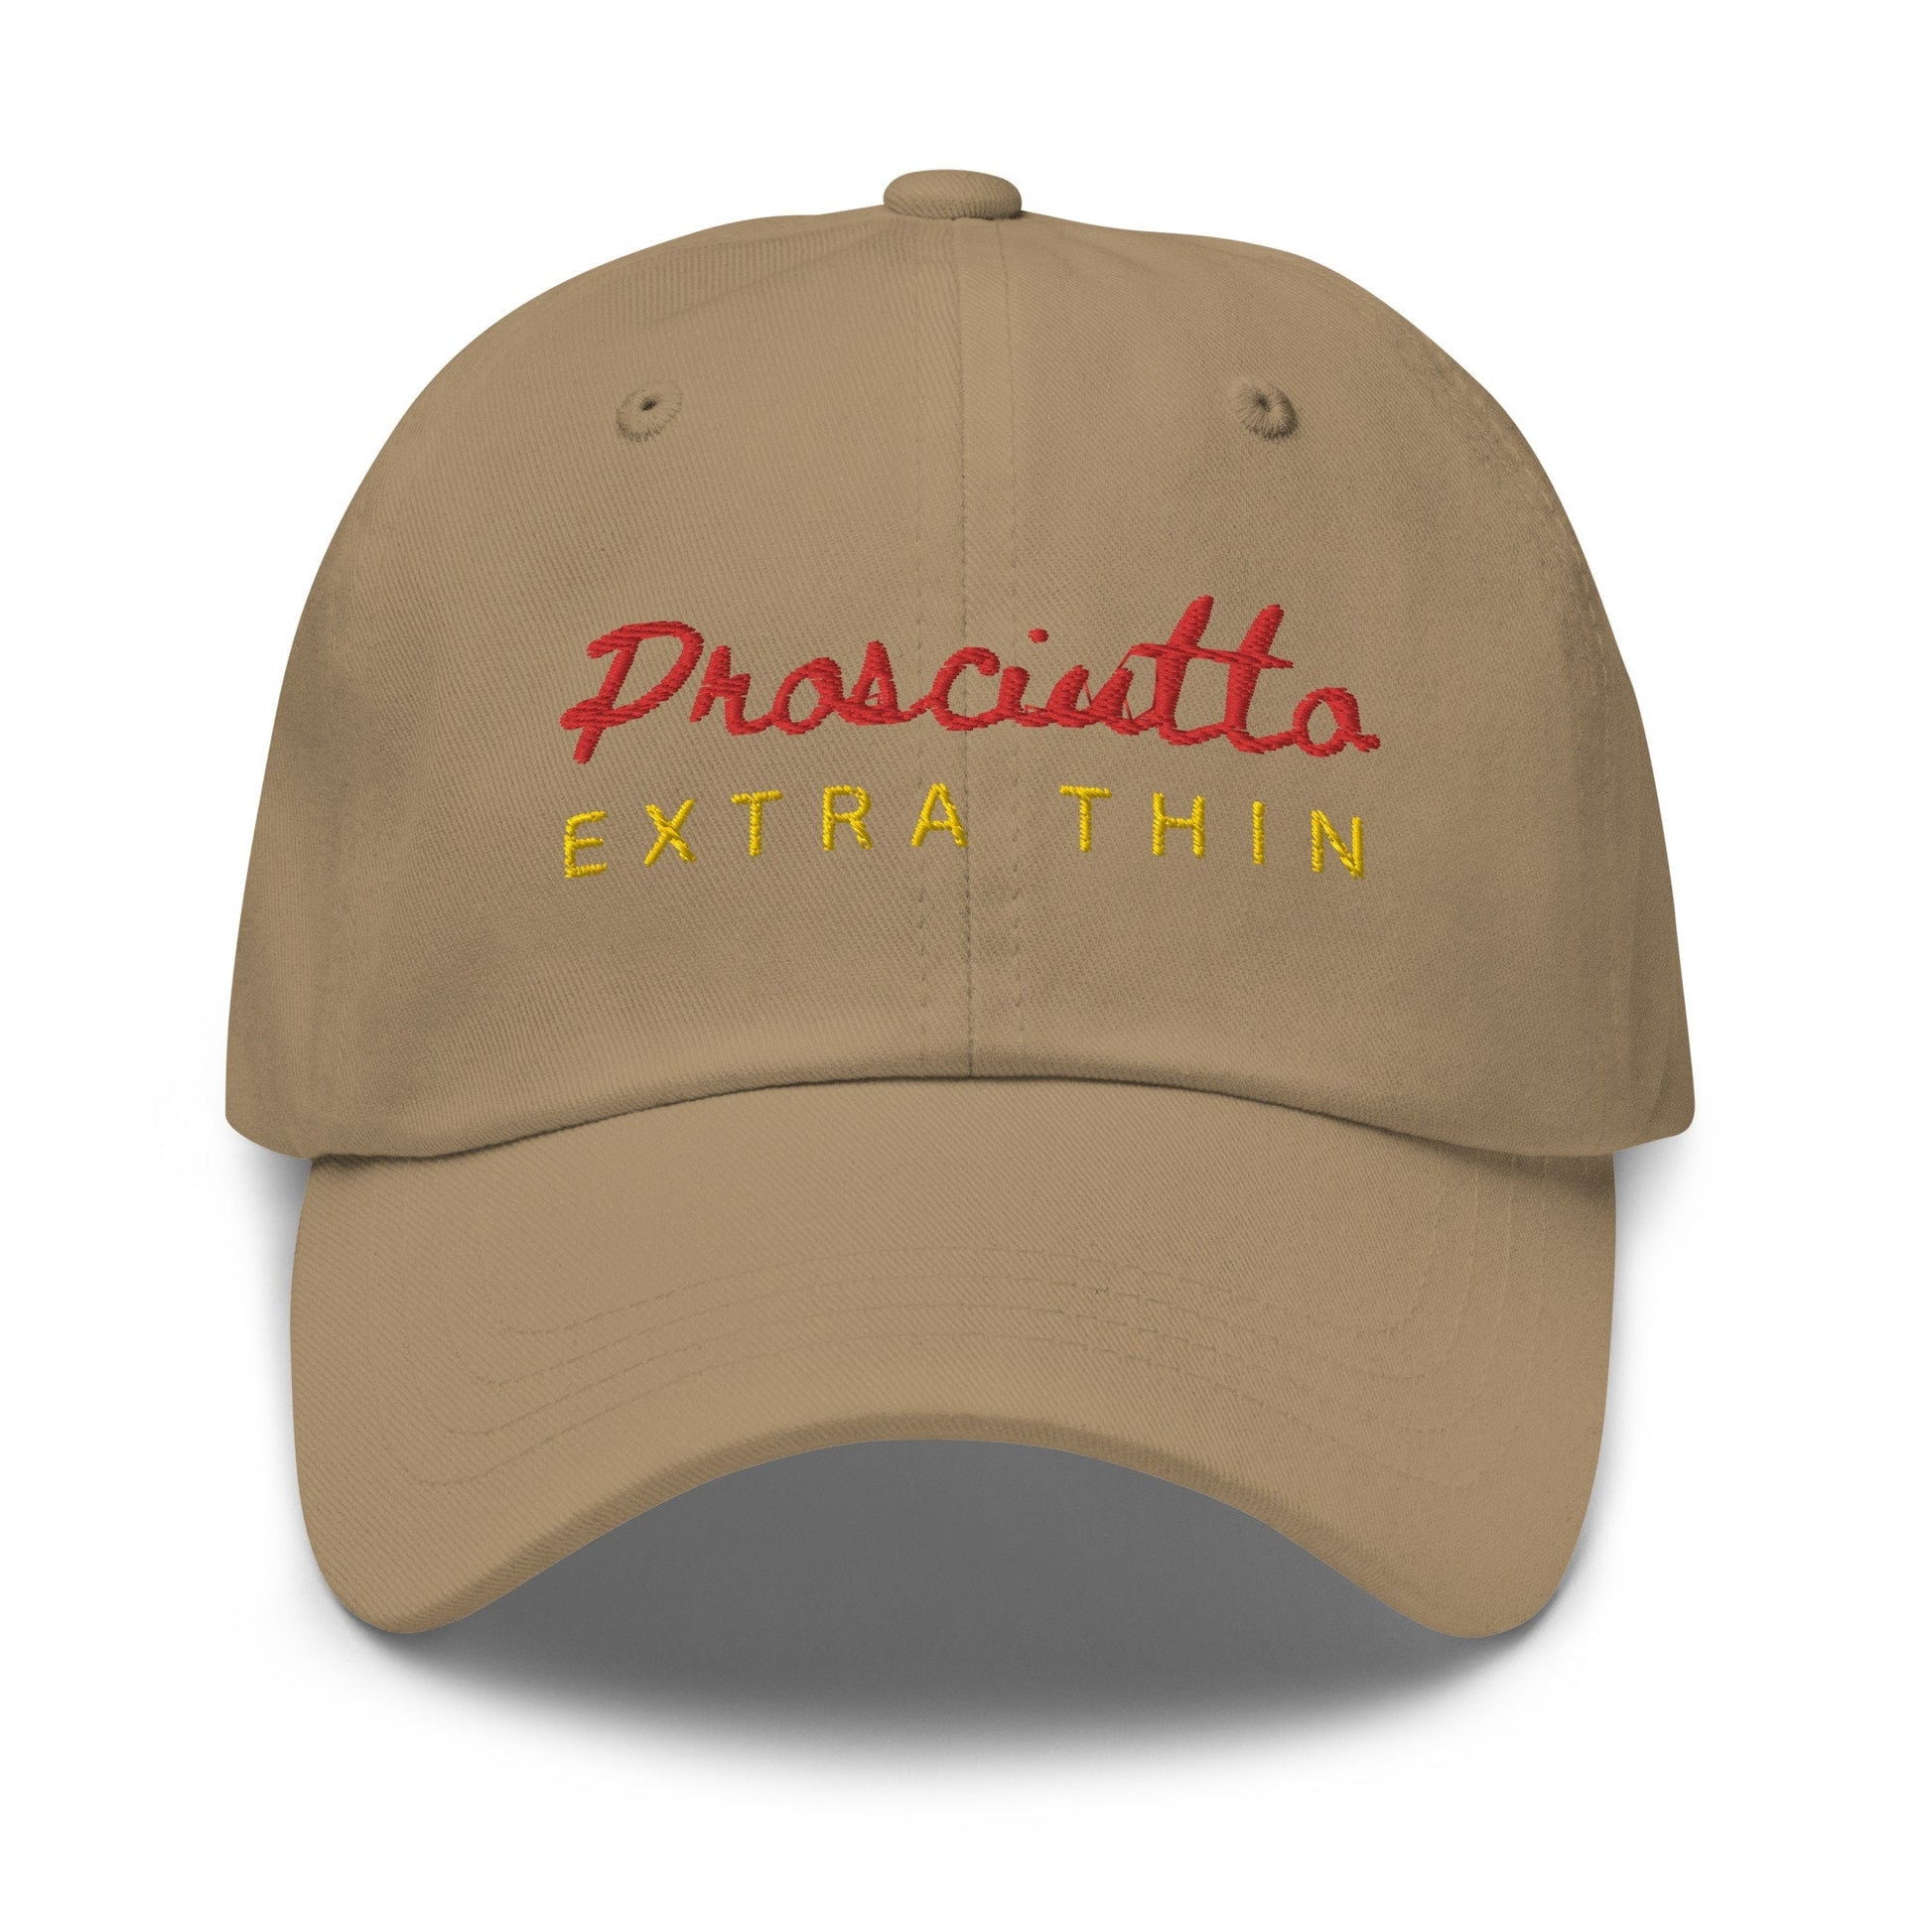 Prosciutto Dad Hat - Thinly Sliced Italian Ham Fans - Minimalist Cotton Embroidered Cap - Evilwater Originals